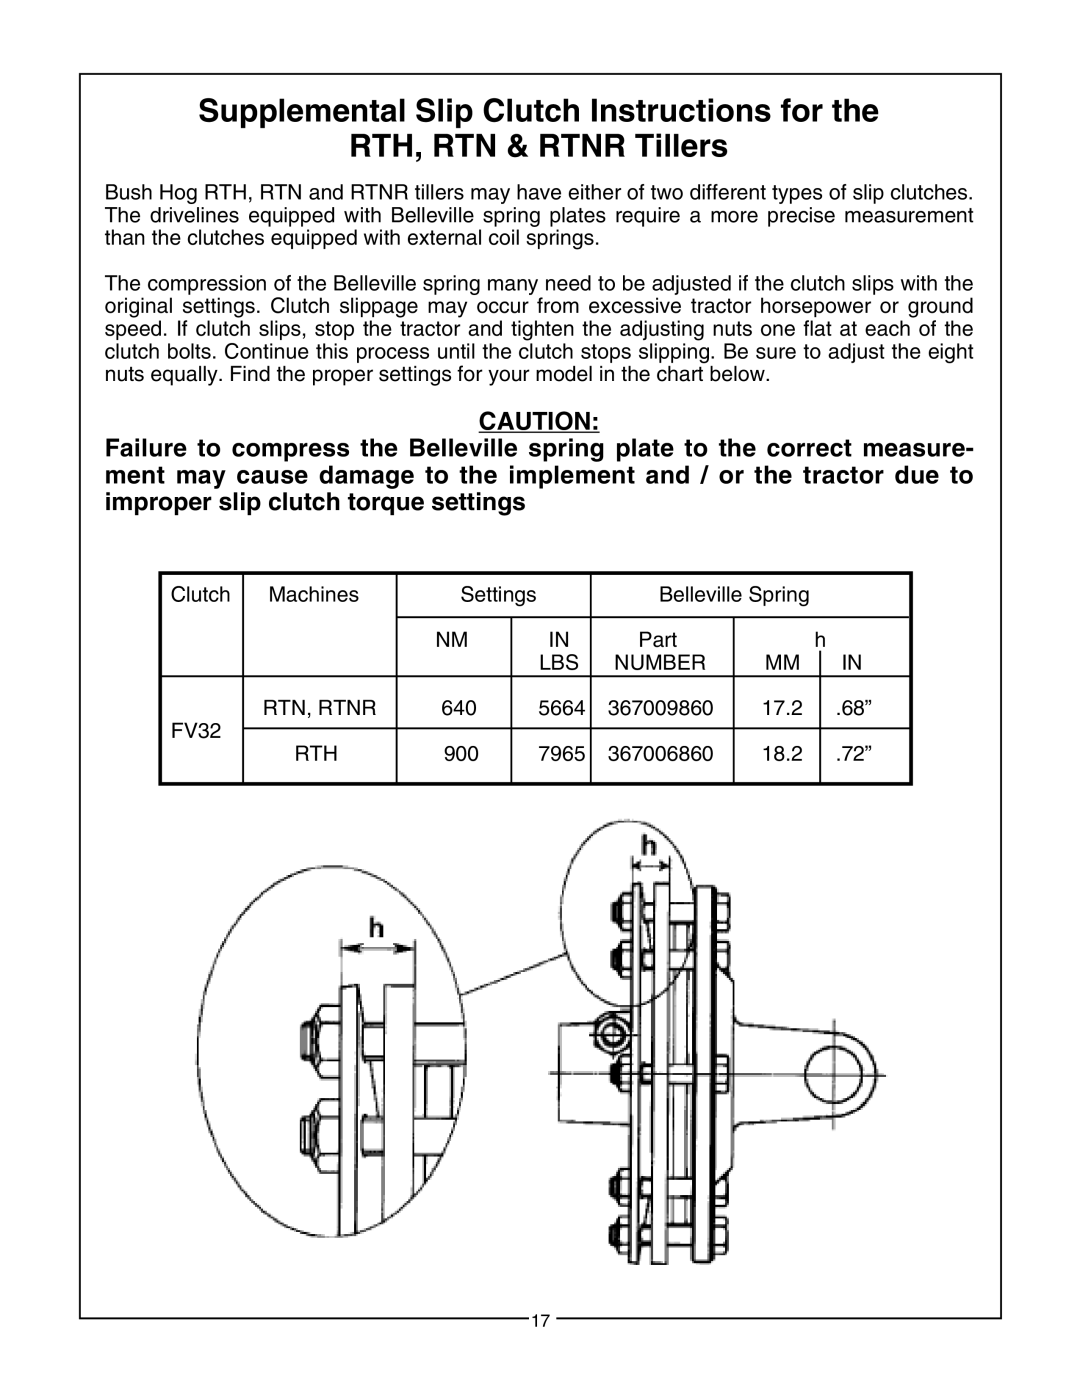 Bush Hog manual Supplemental Slip Clutch Instructions for the, RTH, RTN & RTNR Tillers 